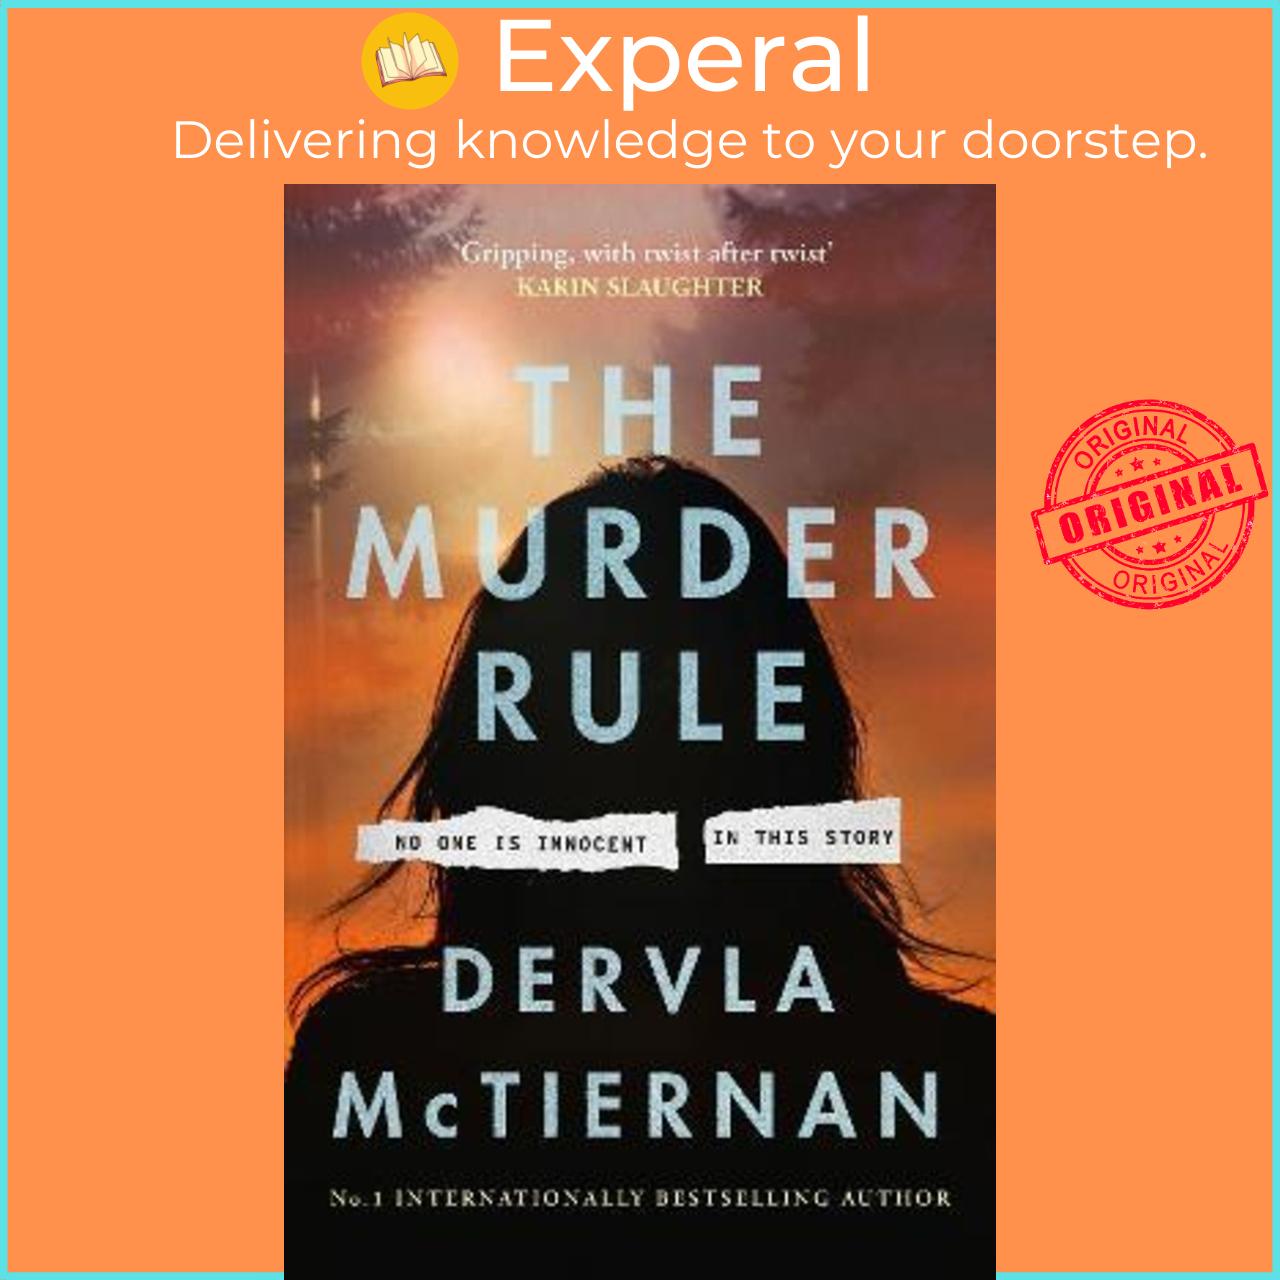 Sách - The Murder Rule by Dervla McTiernan (UK edition, hardcover)